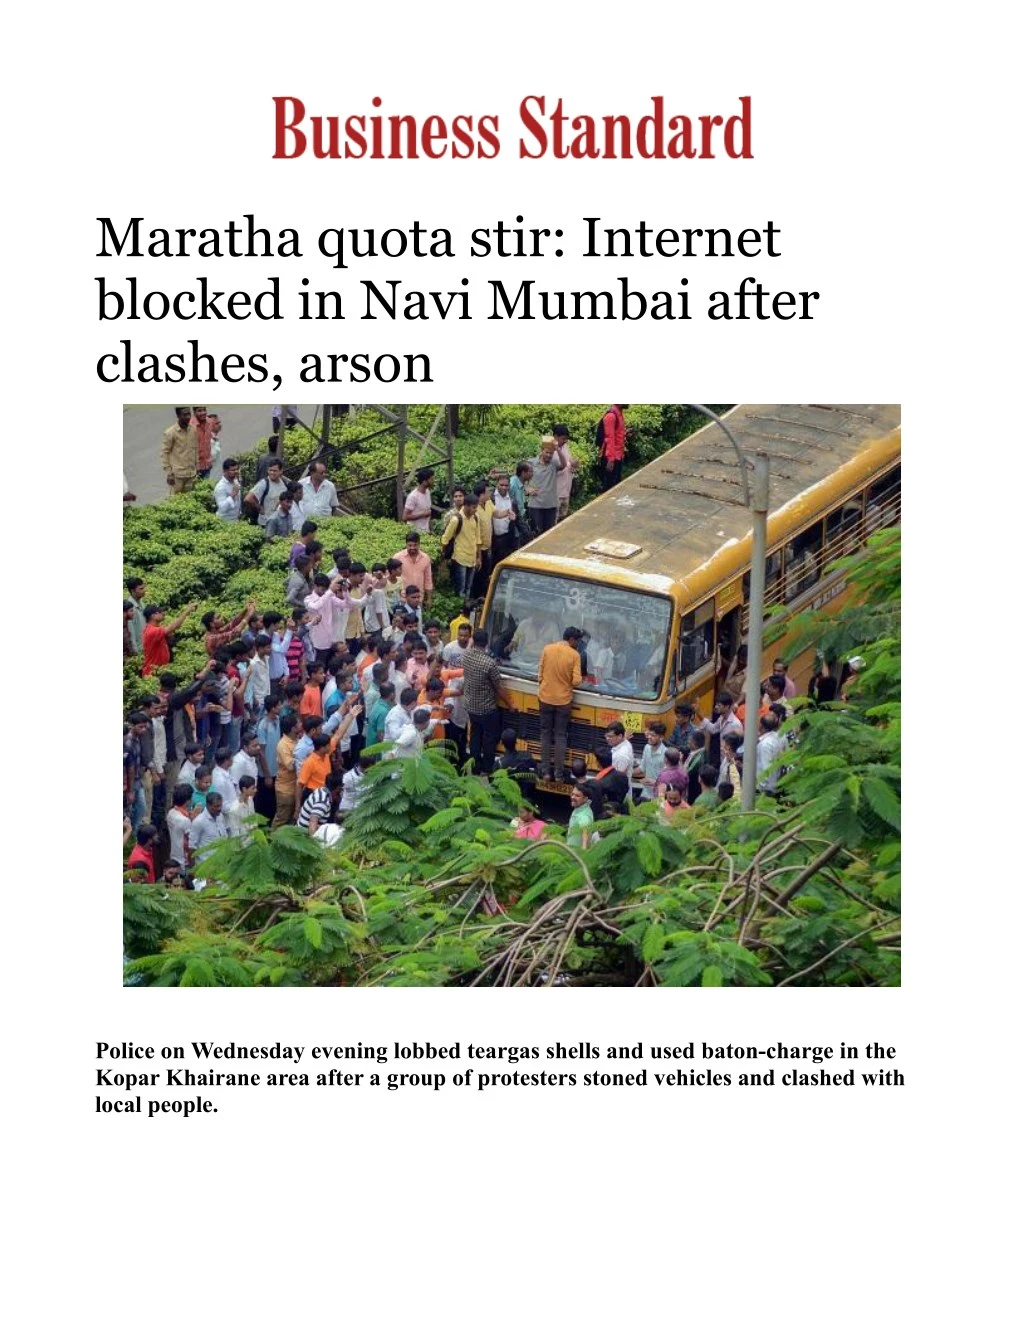 maratha quota stir internet blocked in navi